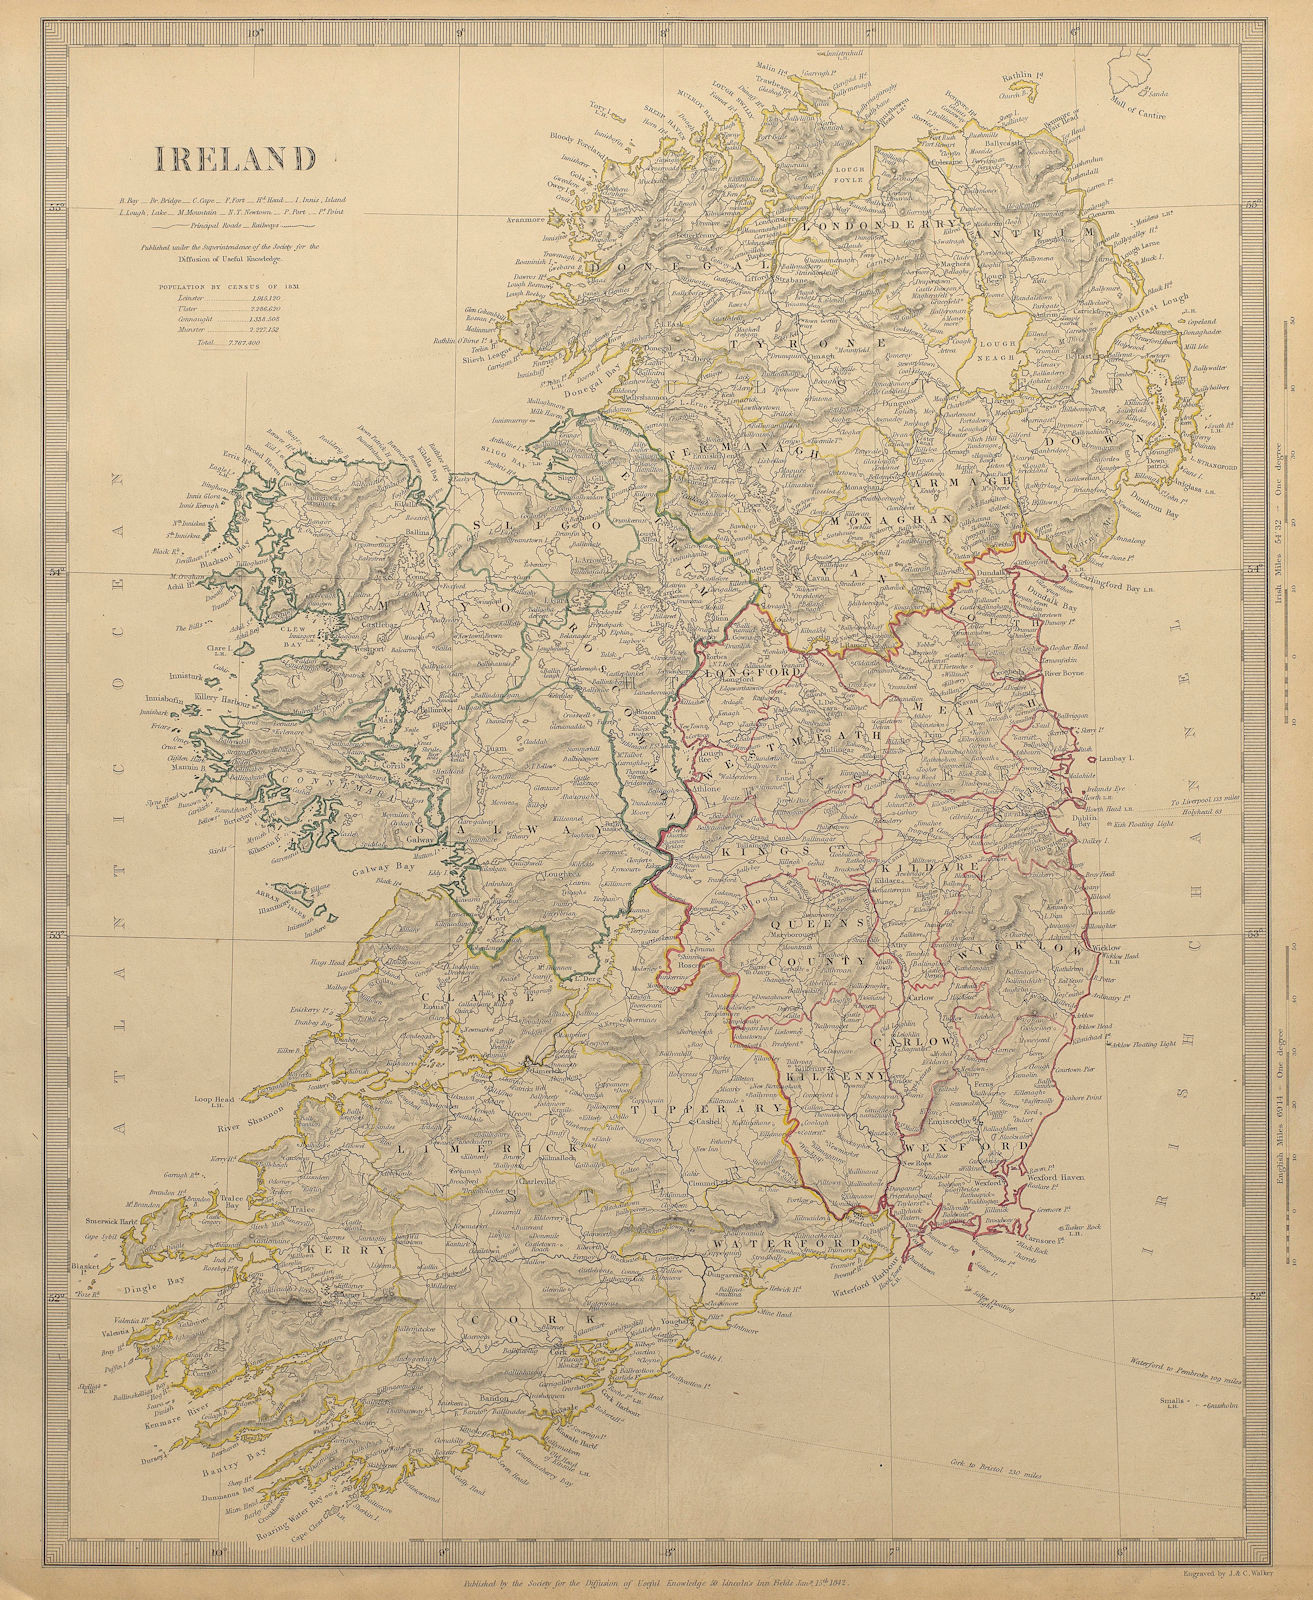 IRELAND with roads. 1st Irish railway Kingstown-Dublin-Drogheda SDUK 1844 map